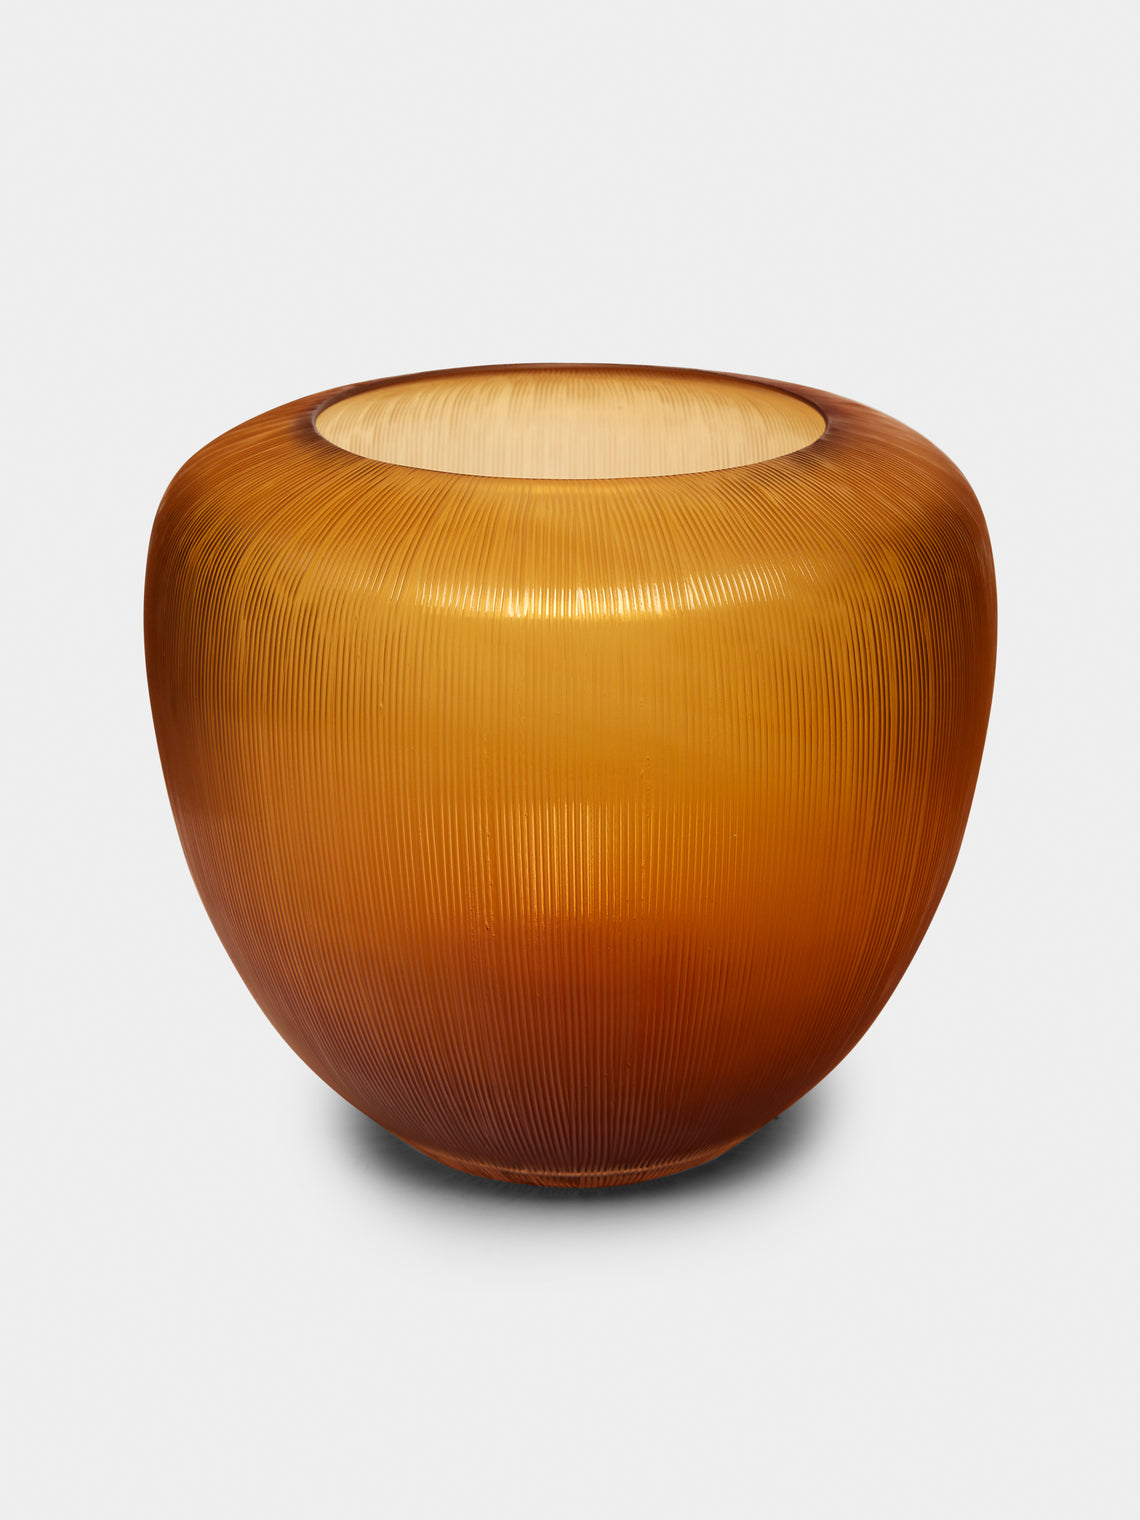 Micheluzzi Glass - Goccia Miele Hand-Blown Murano Glass Vase - Yellow - ABASK - 